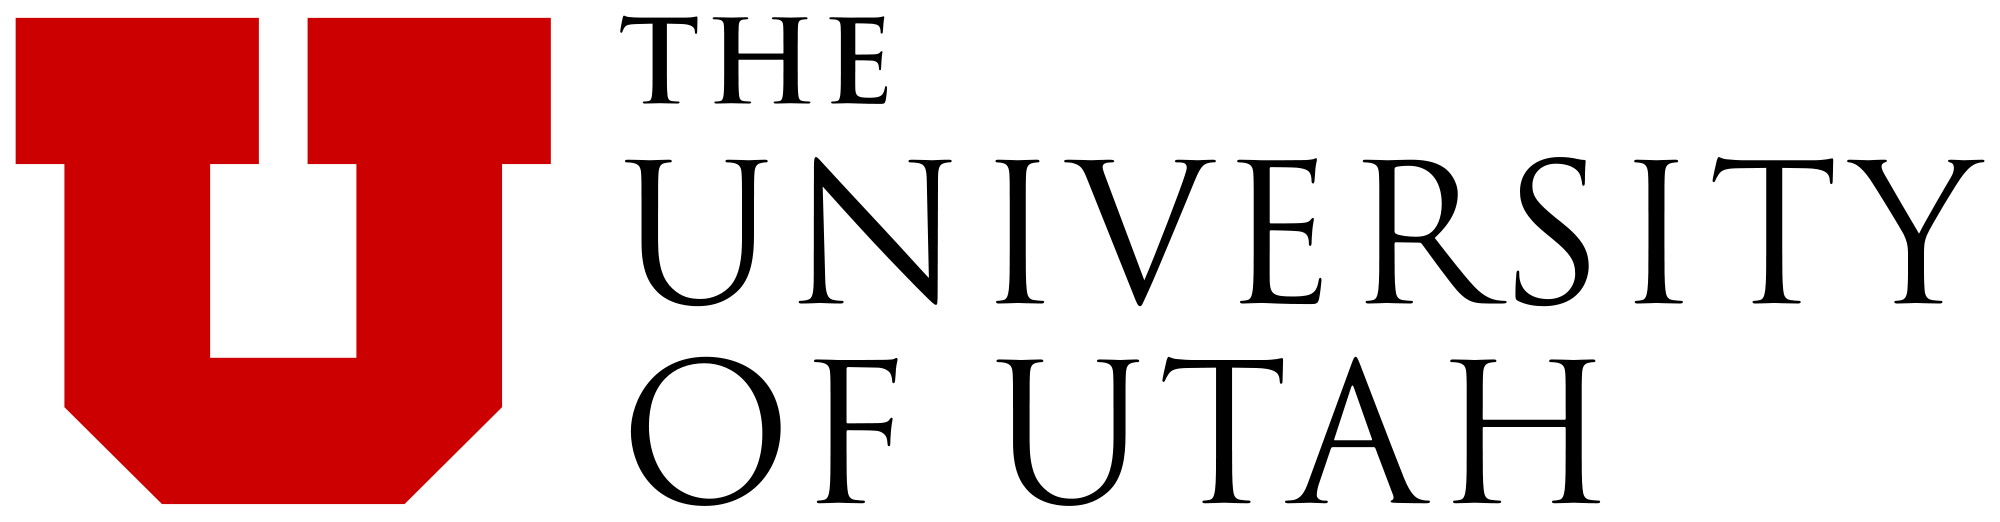 Image of University of Utah logo